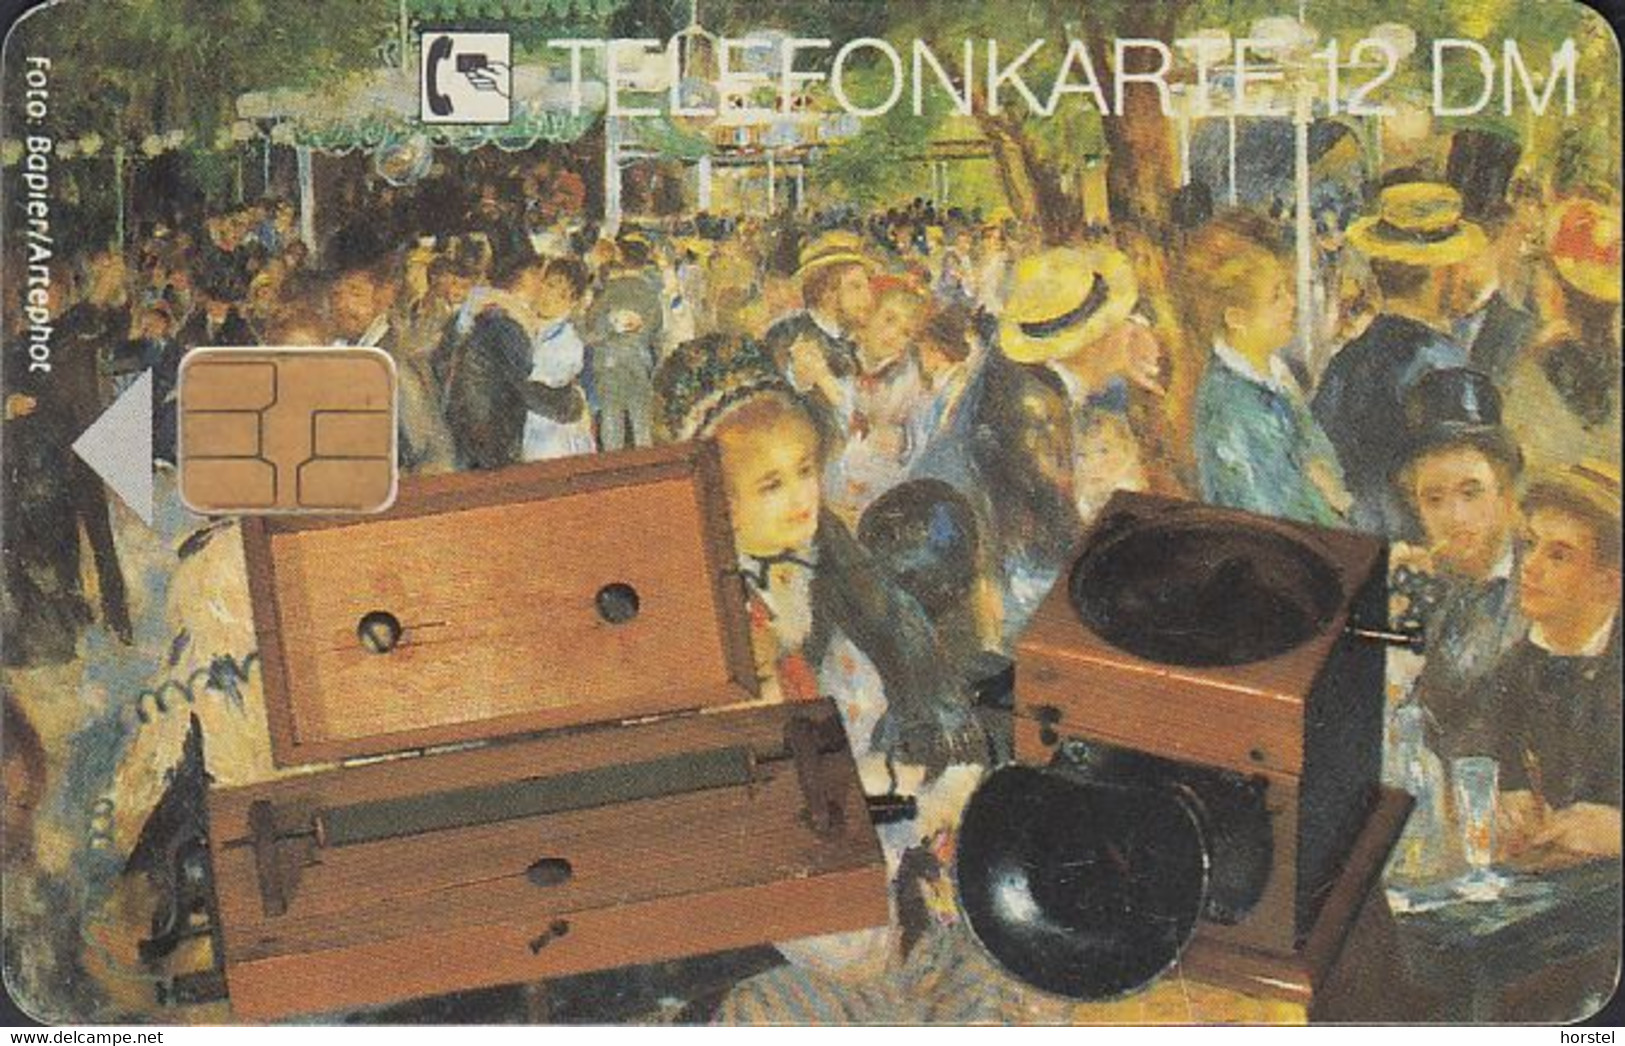 GERMANY E05/92 - Telefon 1863 Johann Phillipp Reis - E-Series : D. Postreklame Edition